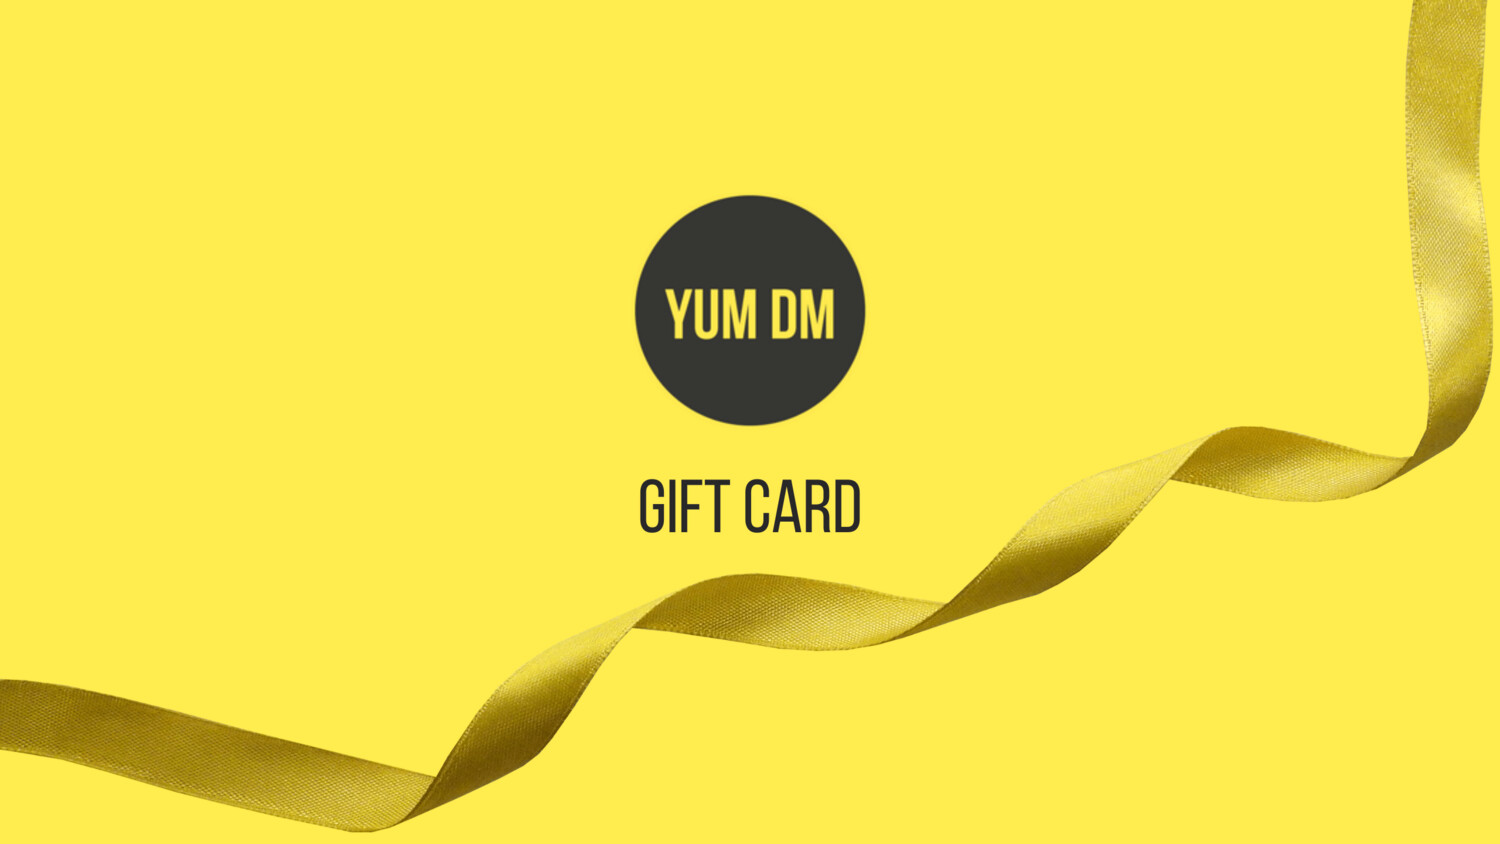 YUMDM Gift card